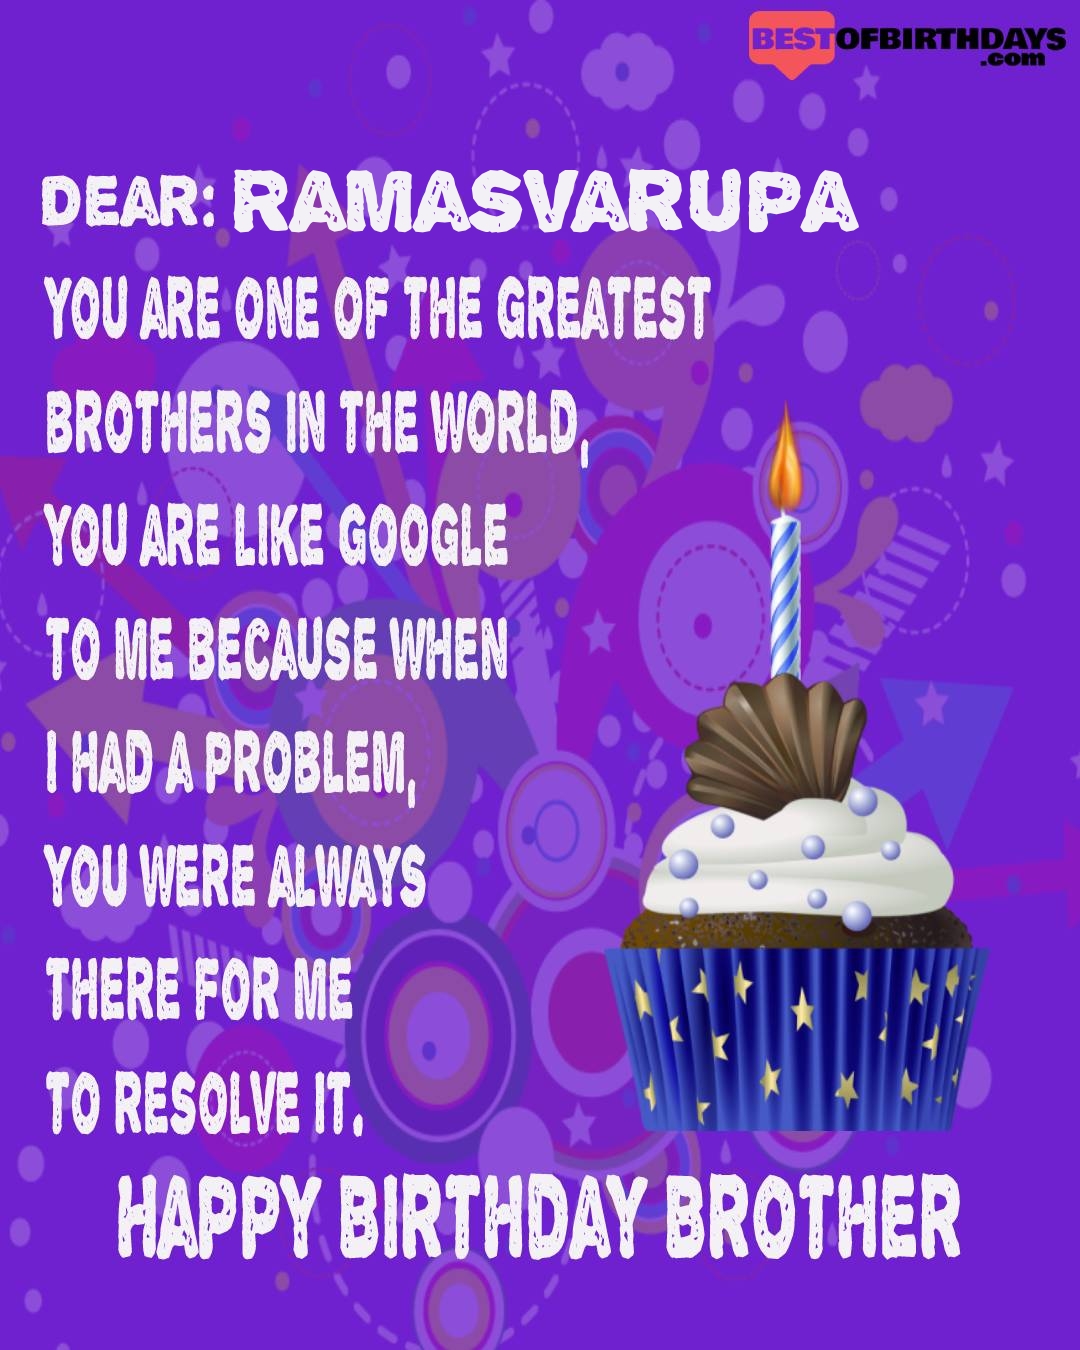 Happy birthday ramasvarupa bhai brother bro